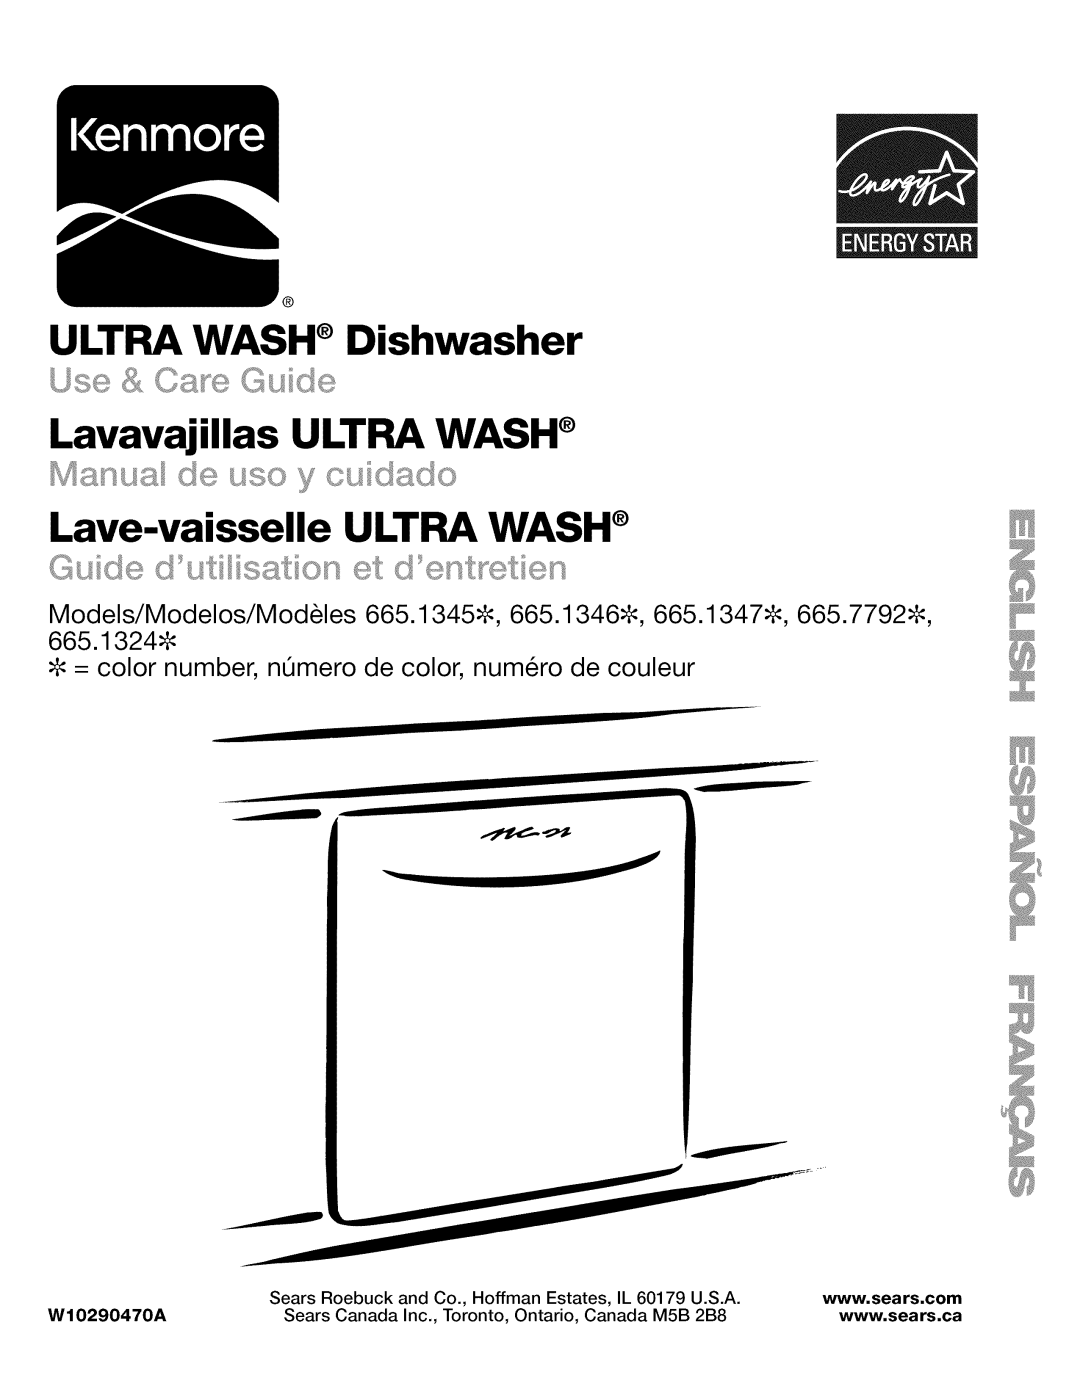 Kenmore 665.13245 manual ULTRA WASH Dishwasher, Lavavajillas ULTRA WASH, Lave-vaisselleULTRA WASH, Joe & C ,e Guide 